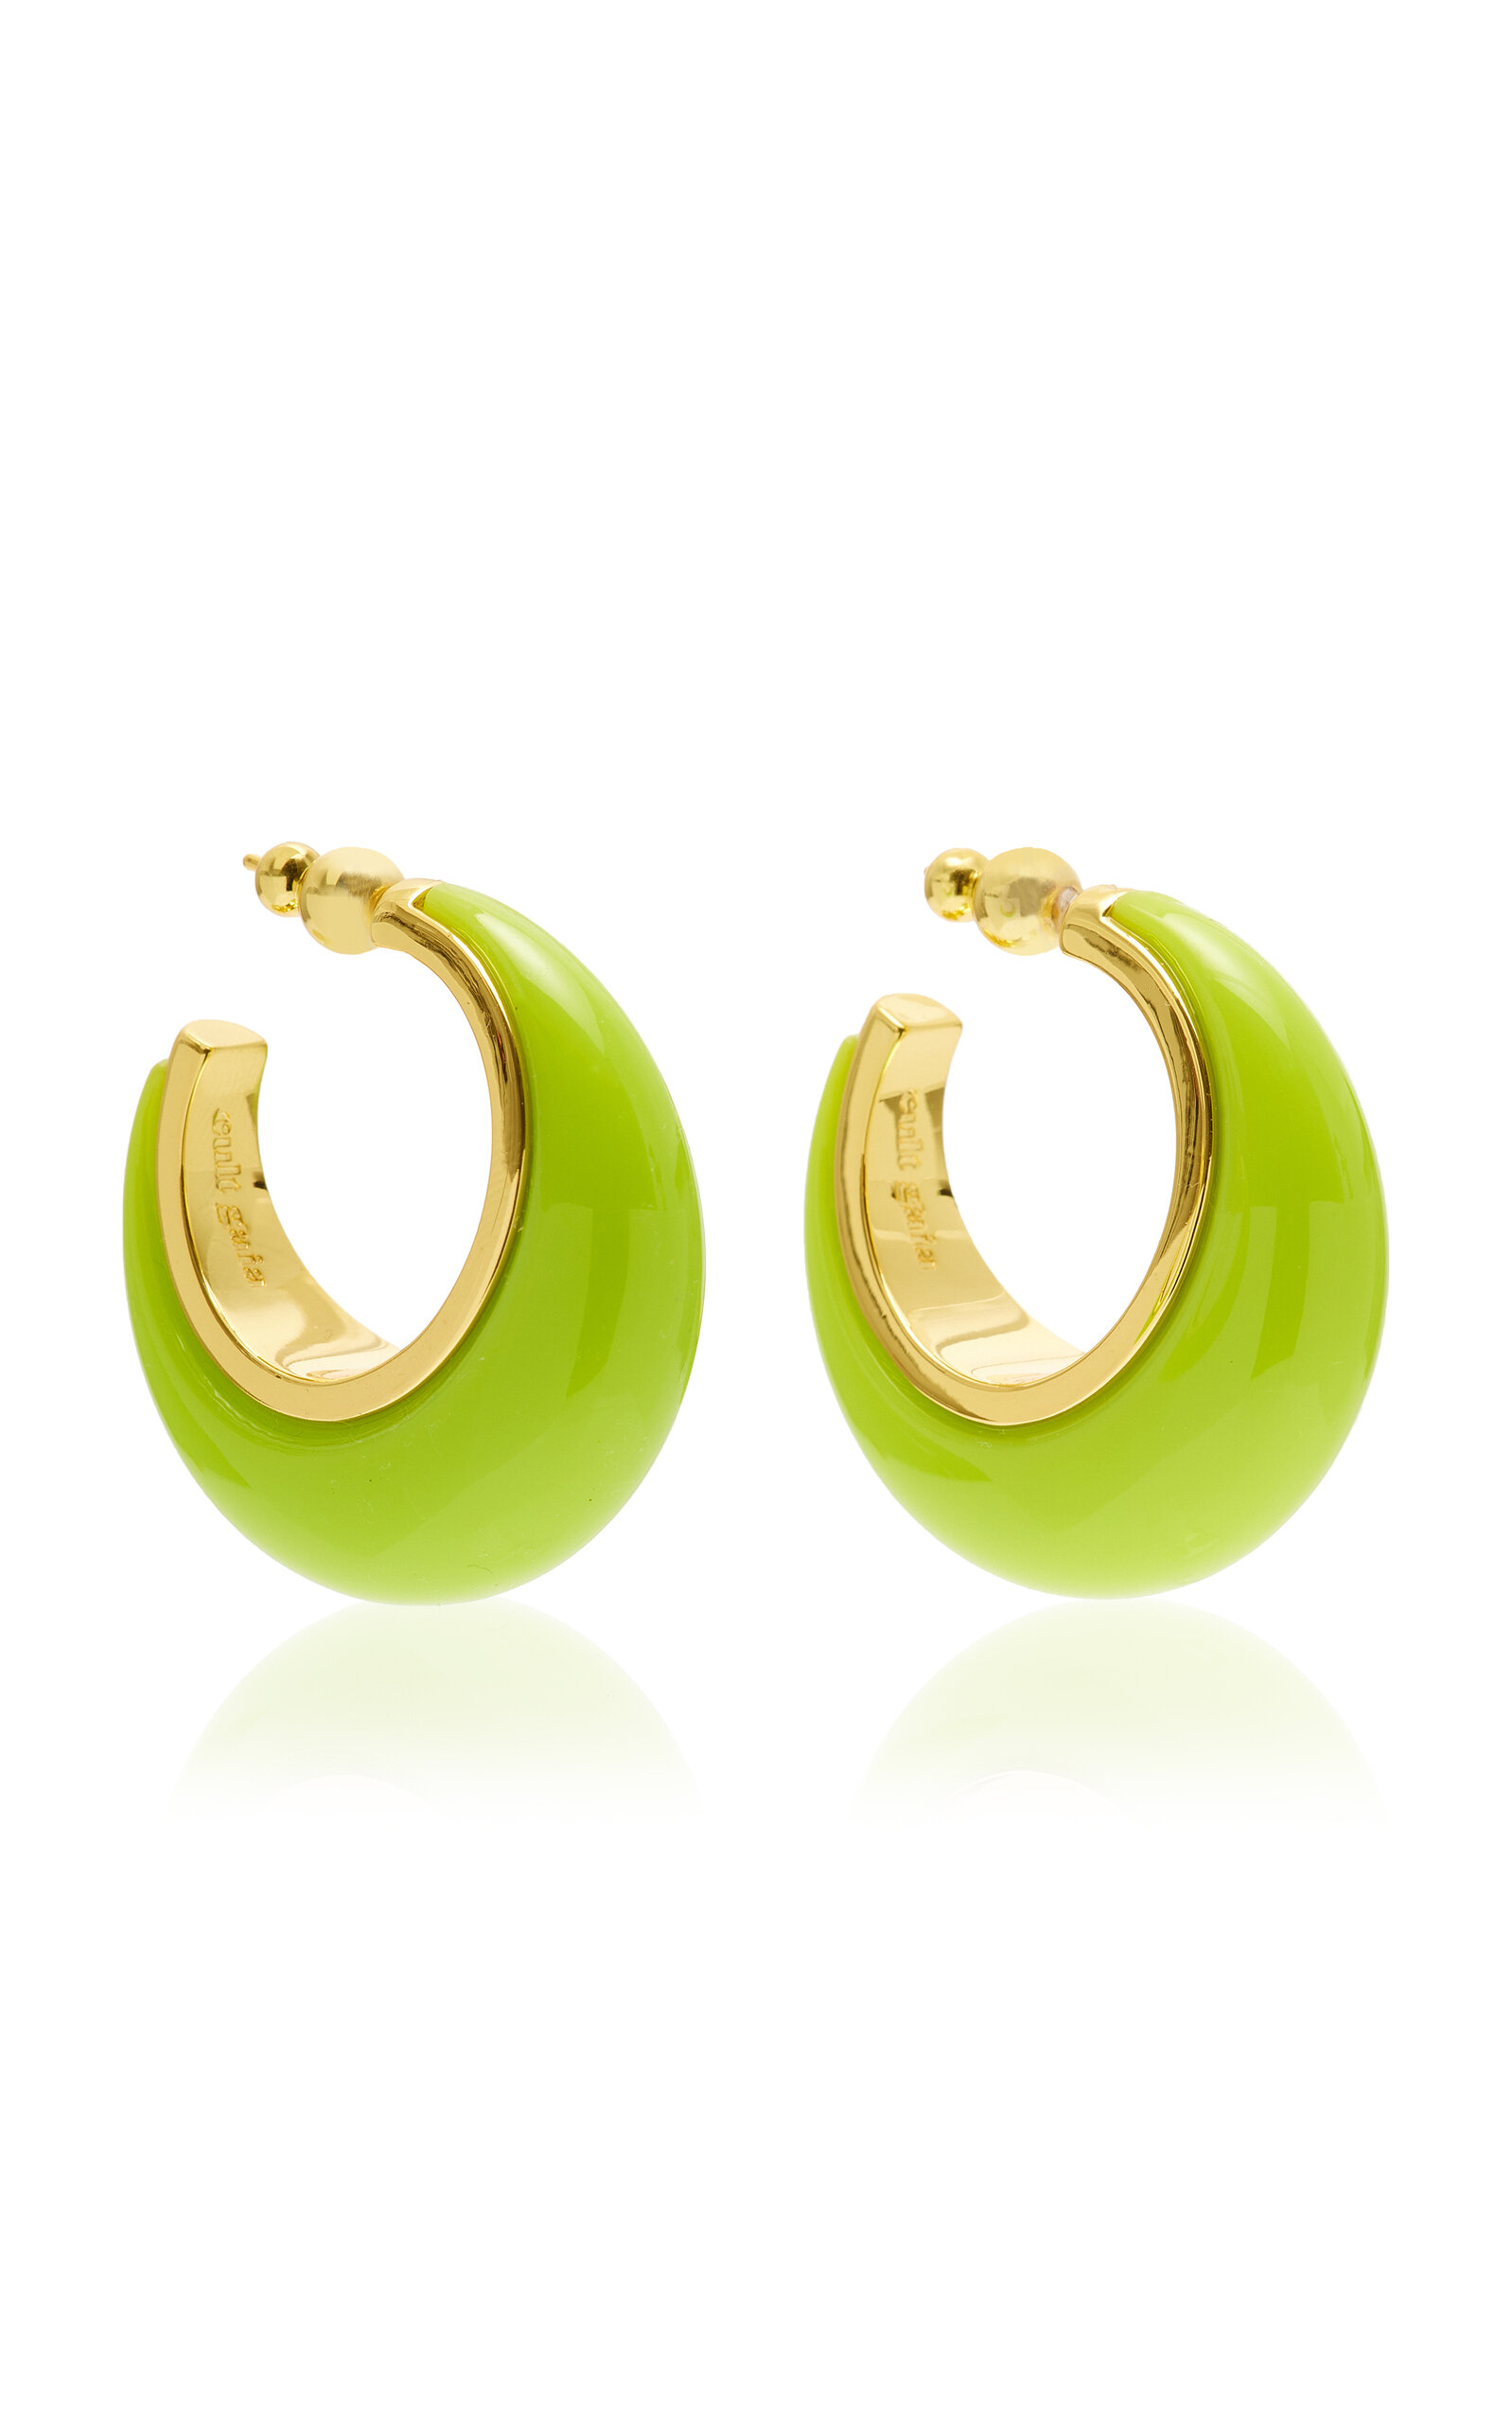 Cult Gaia - Women's Mona Enameled Hoop Earrings - Green - OS - Moda Operandi - Gifts For Her